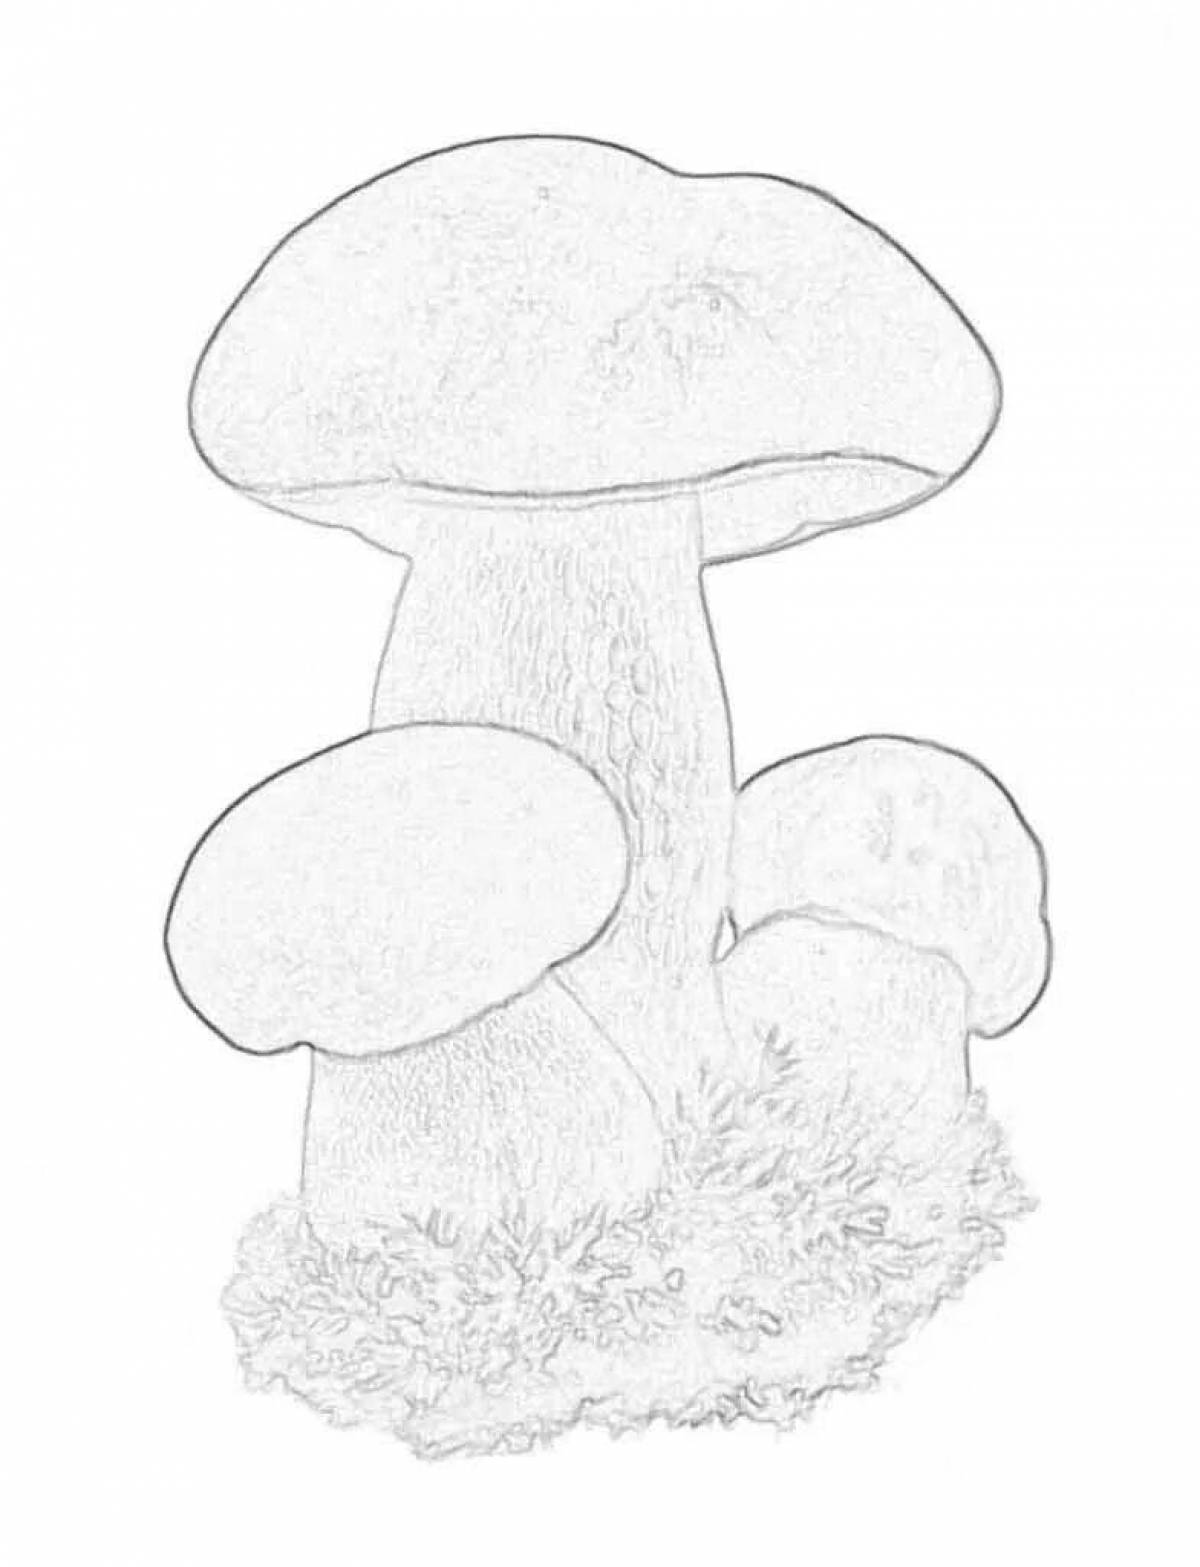 Vibrant satanic mushroom coloring page